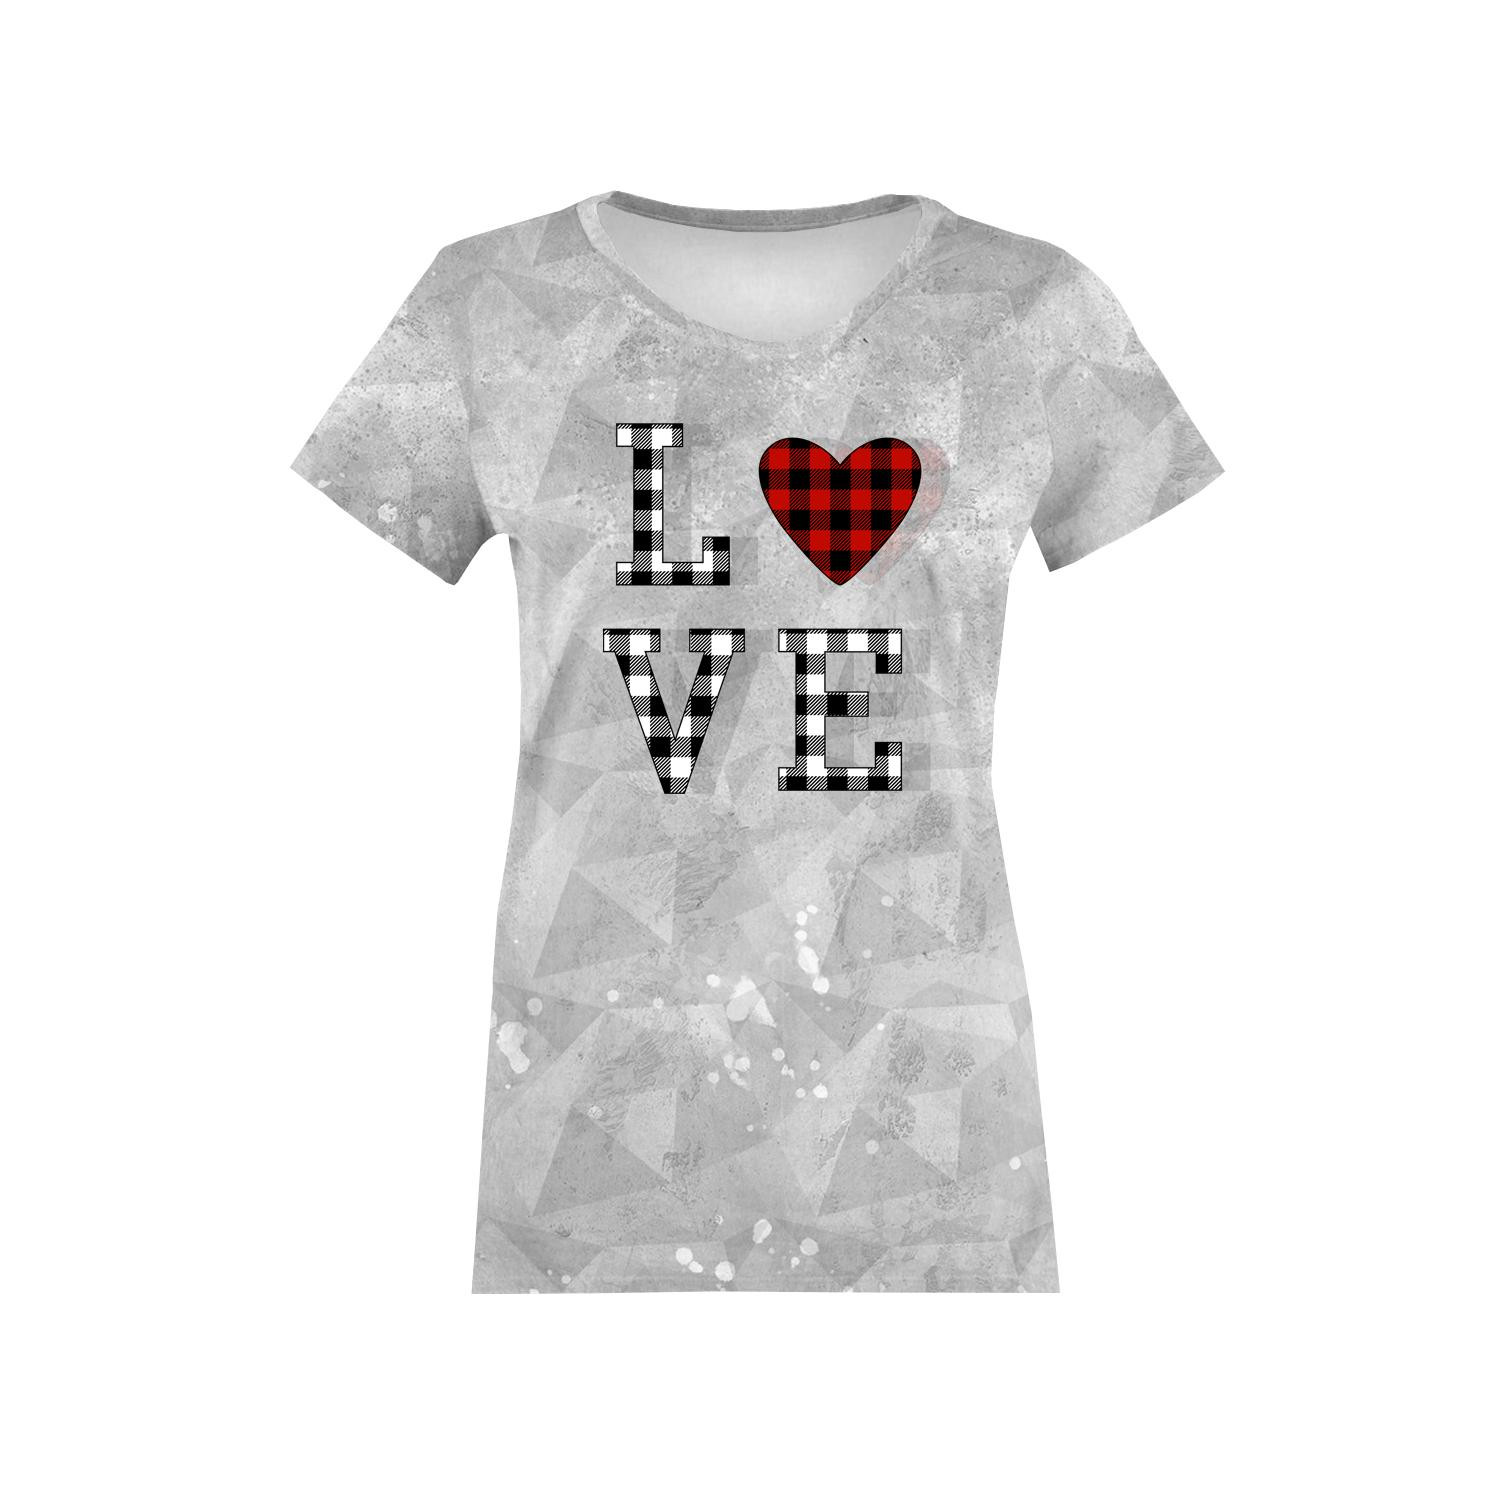 T-SHIRT DAMSKI - LOVE / serce vichy (BE MY VALENTINE) / LÓD - single jersey